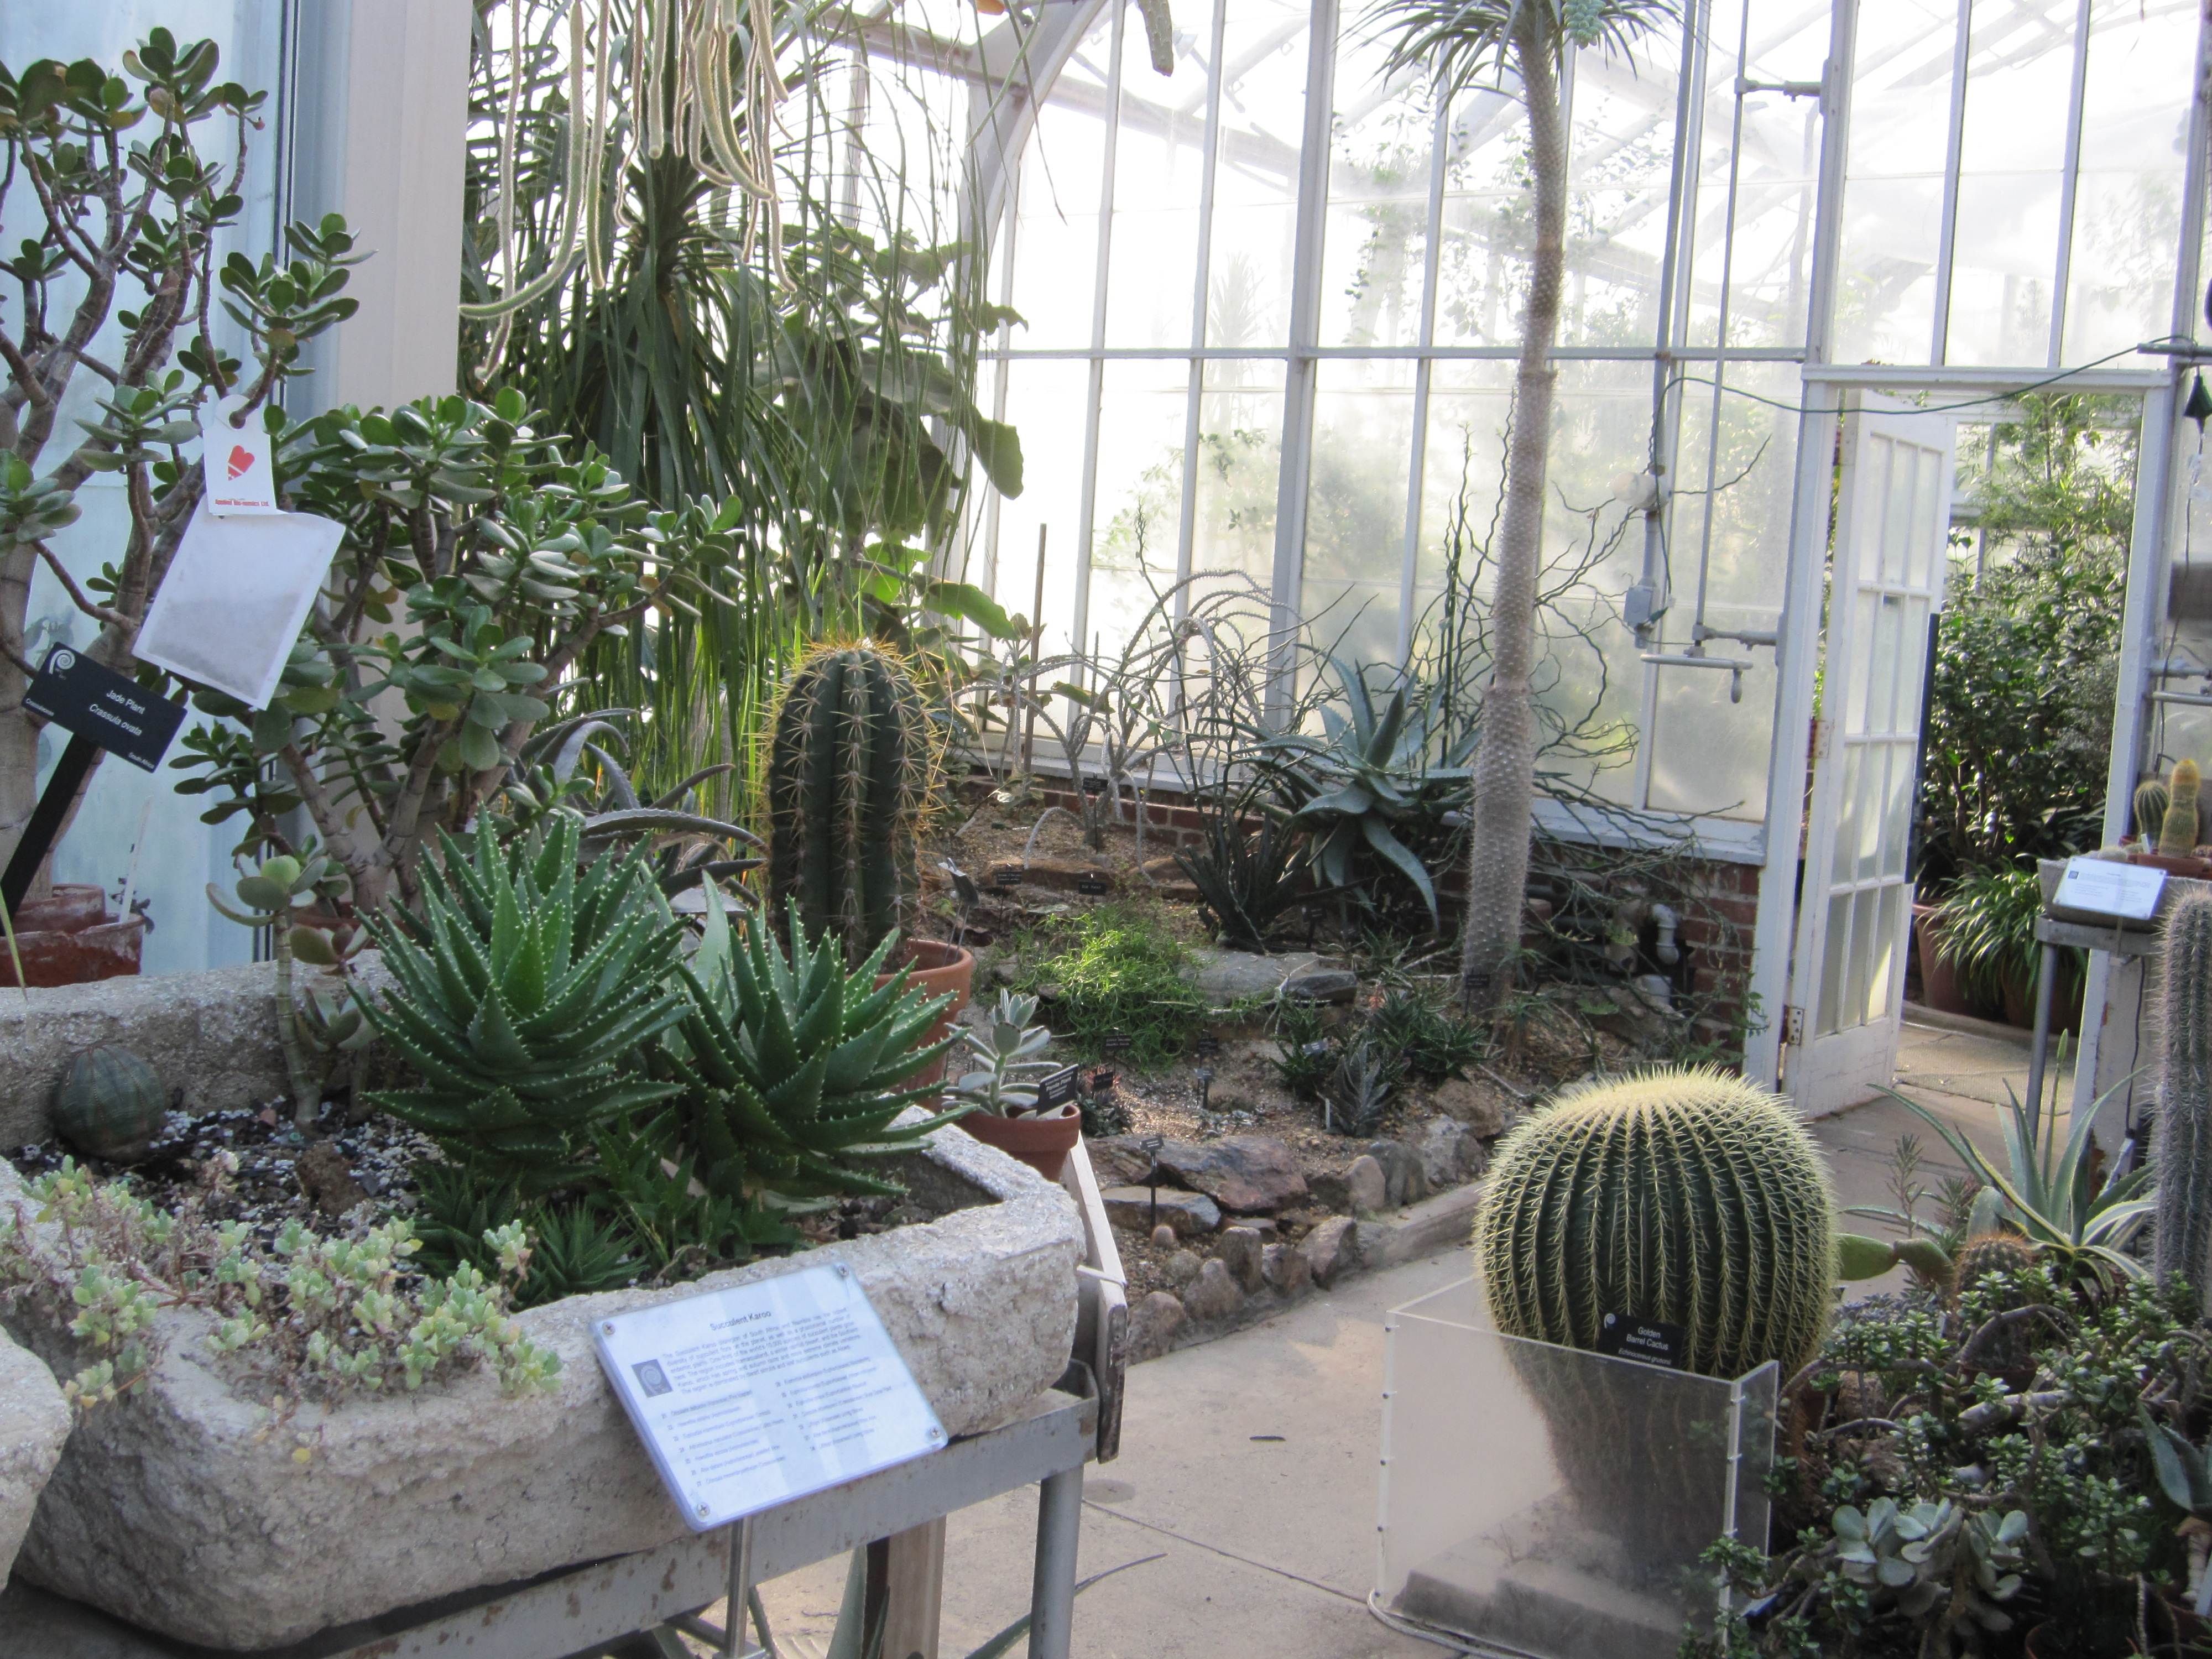 Wellesley greenhouse 101